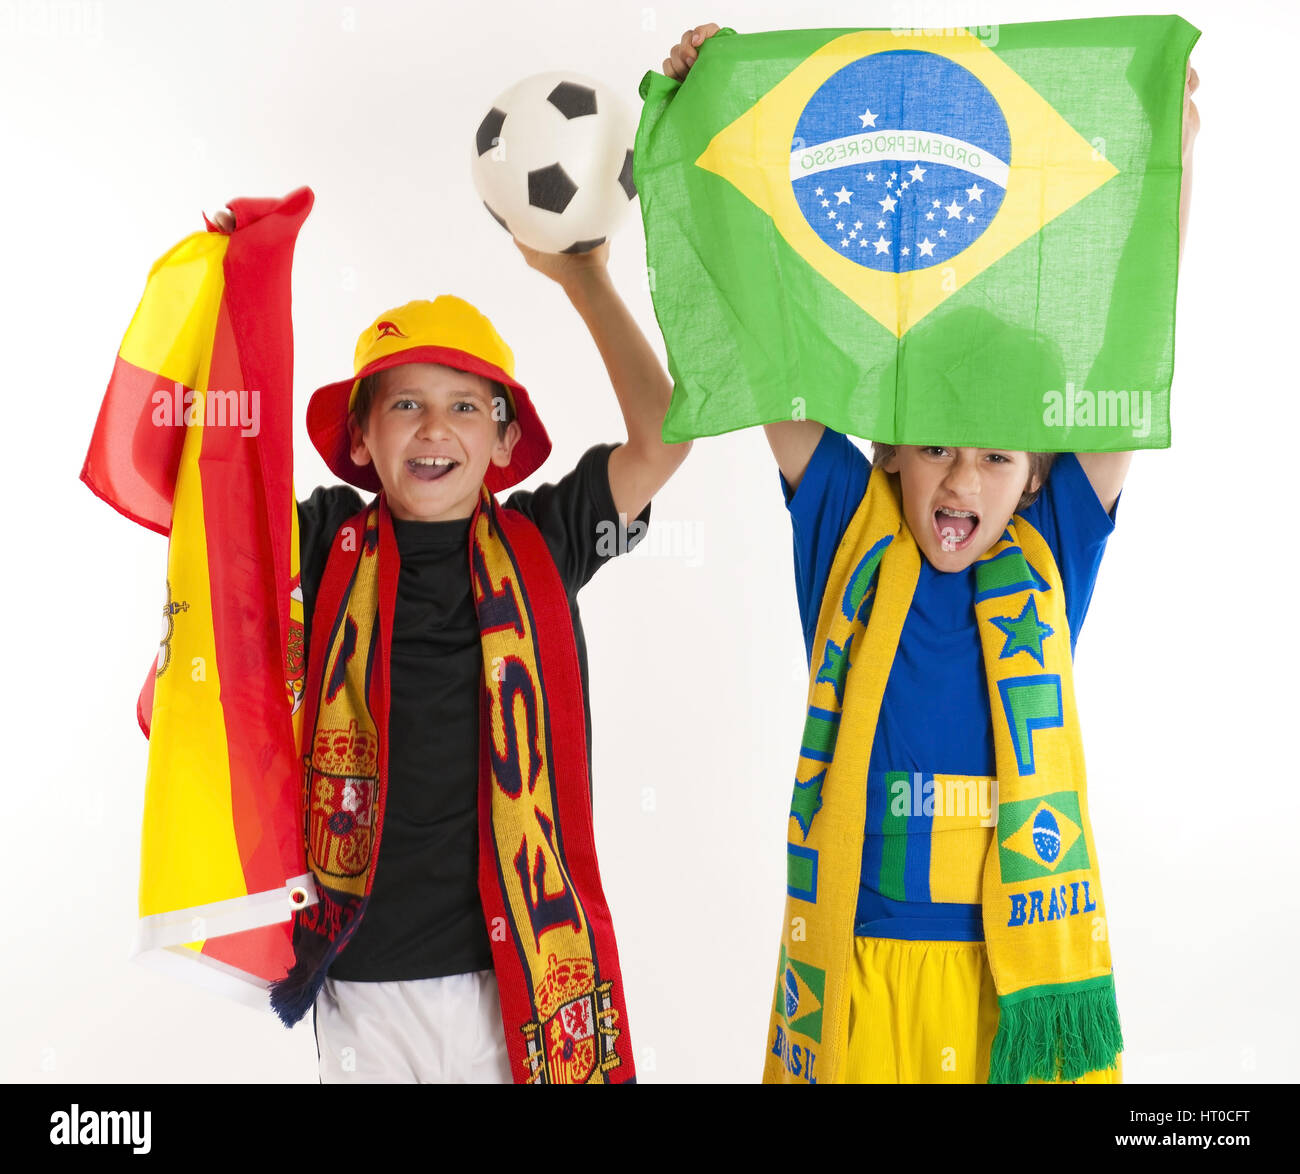 Fu?ballfans, Fu?ball-WM - soccer fans Foto Stock